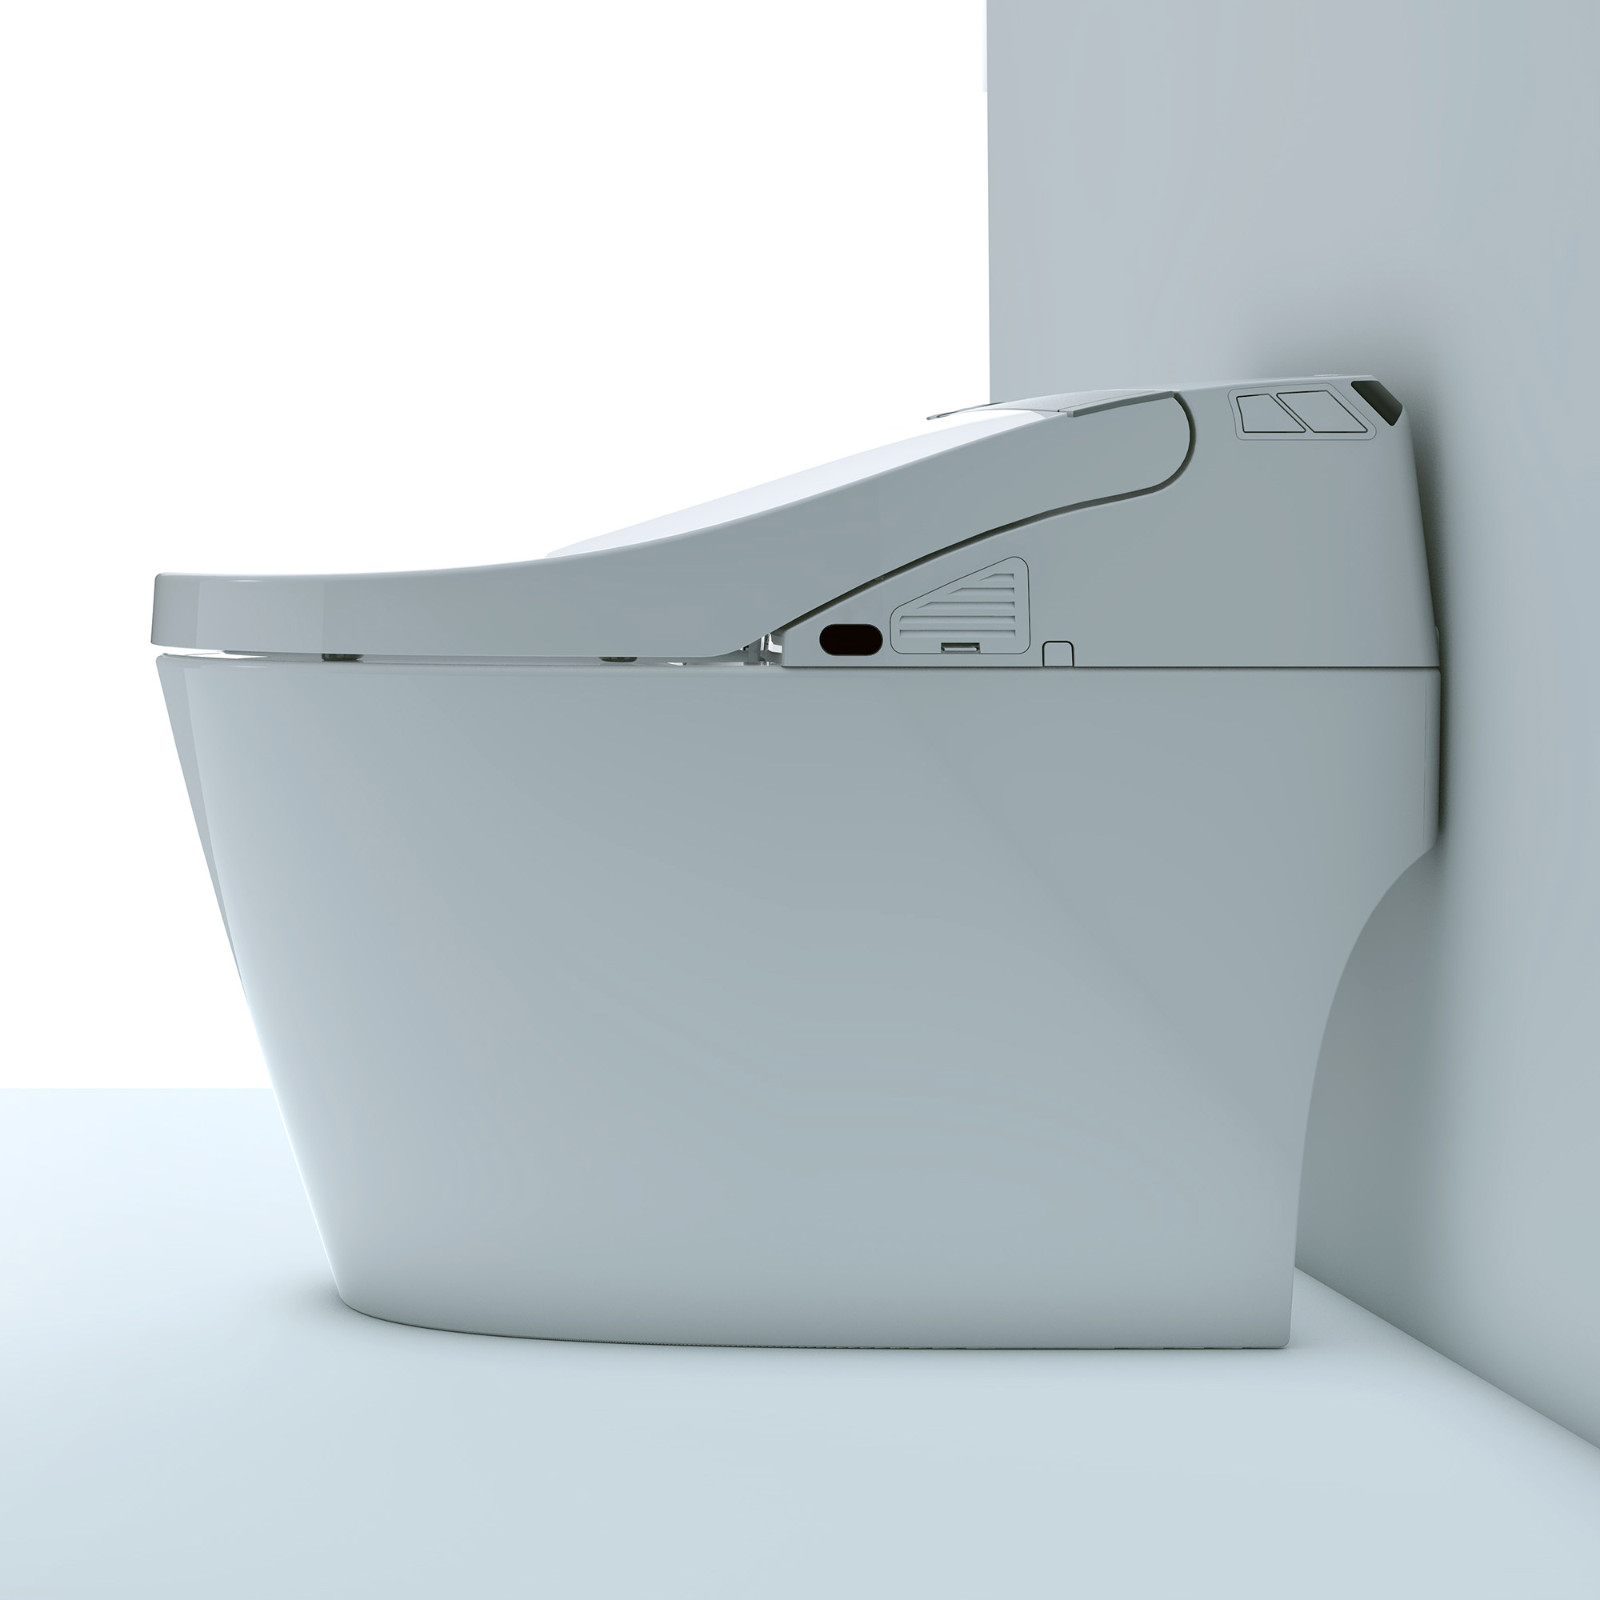  WOODBRIDGE B0960S Auto Flush, Auto Open & Auto Close, 1.28 GPF Single Flush Toilet with Intelligent Smart Bidet Seat and Wireless Remote Control, Chair Height_10812